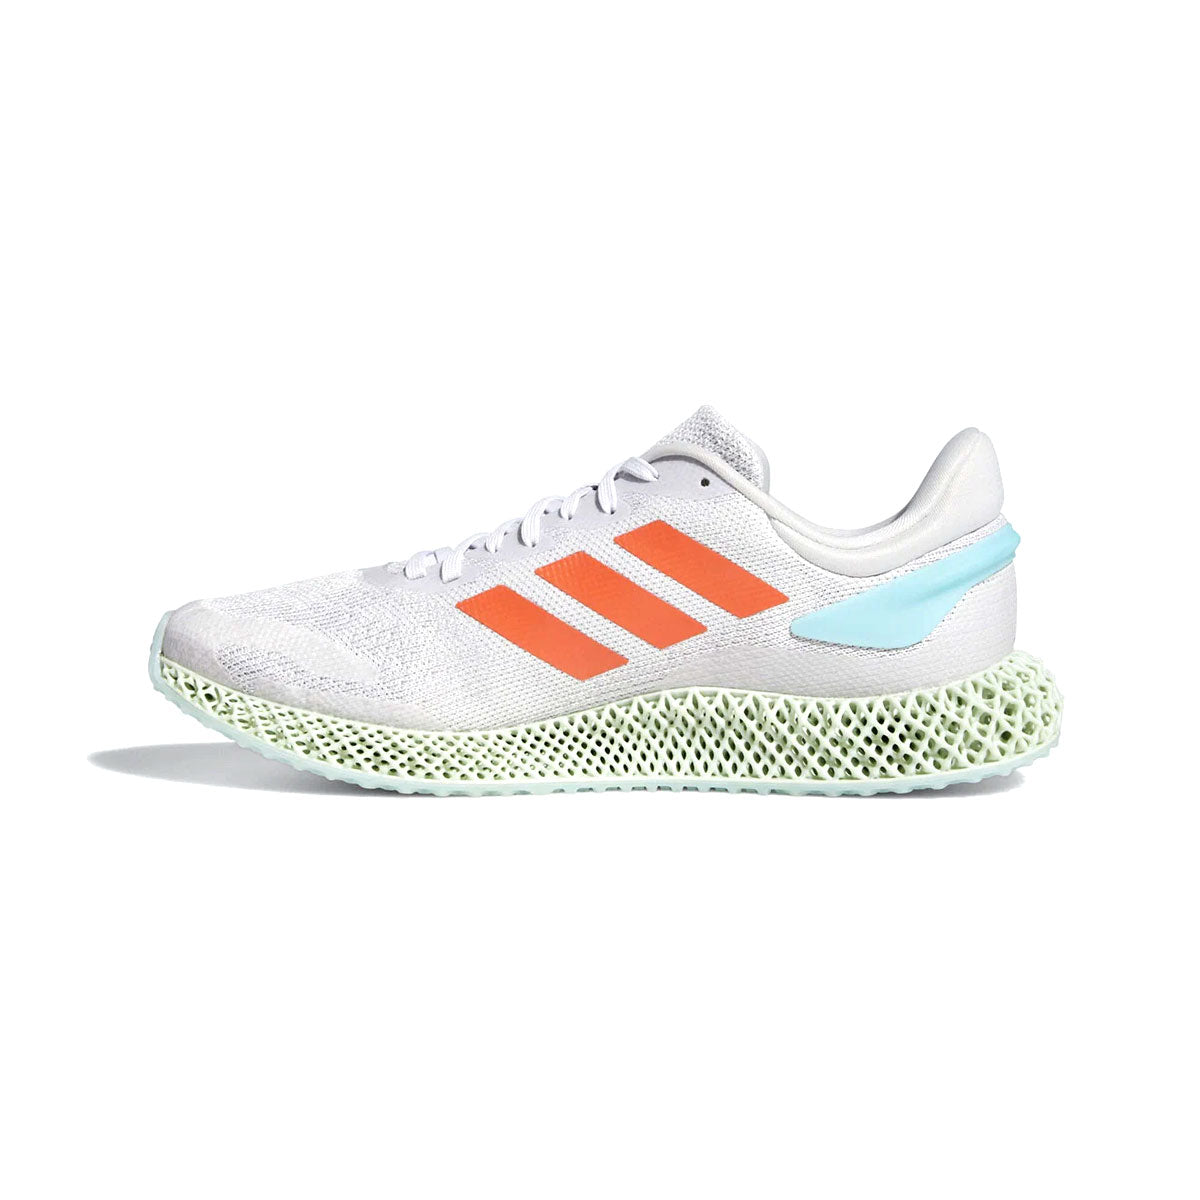 Adidas Men's 4D Run 1.0 Signal Coral